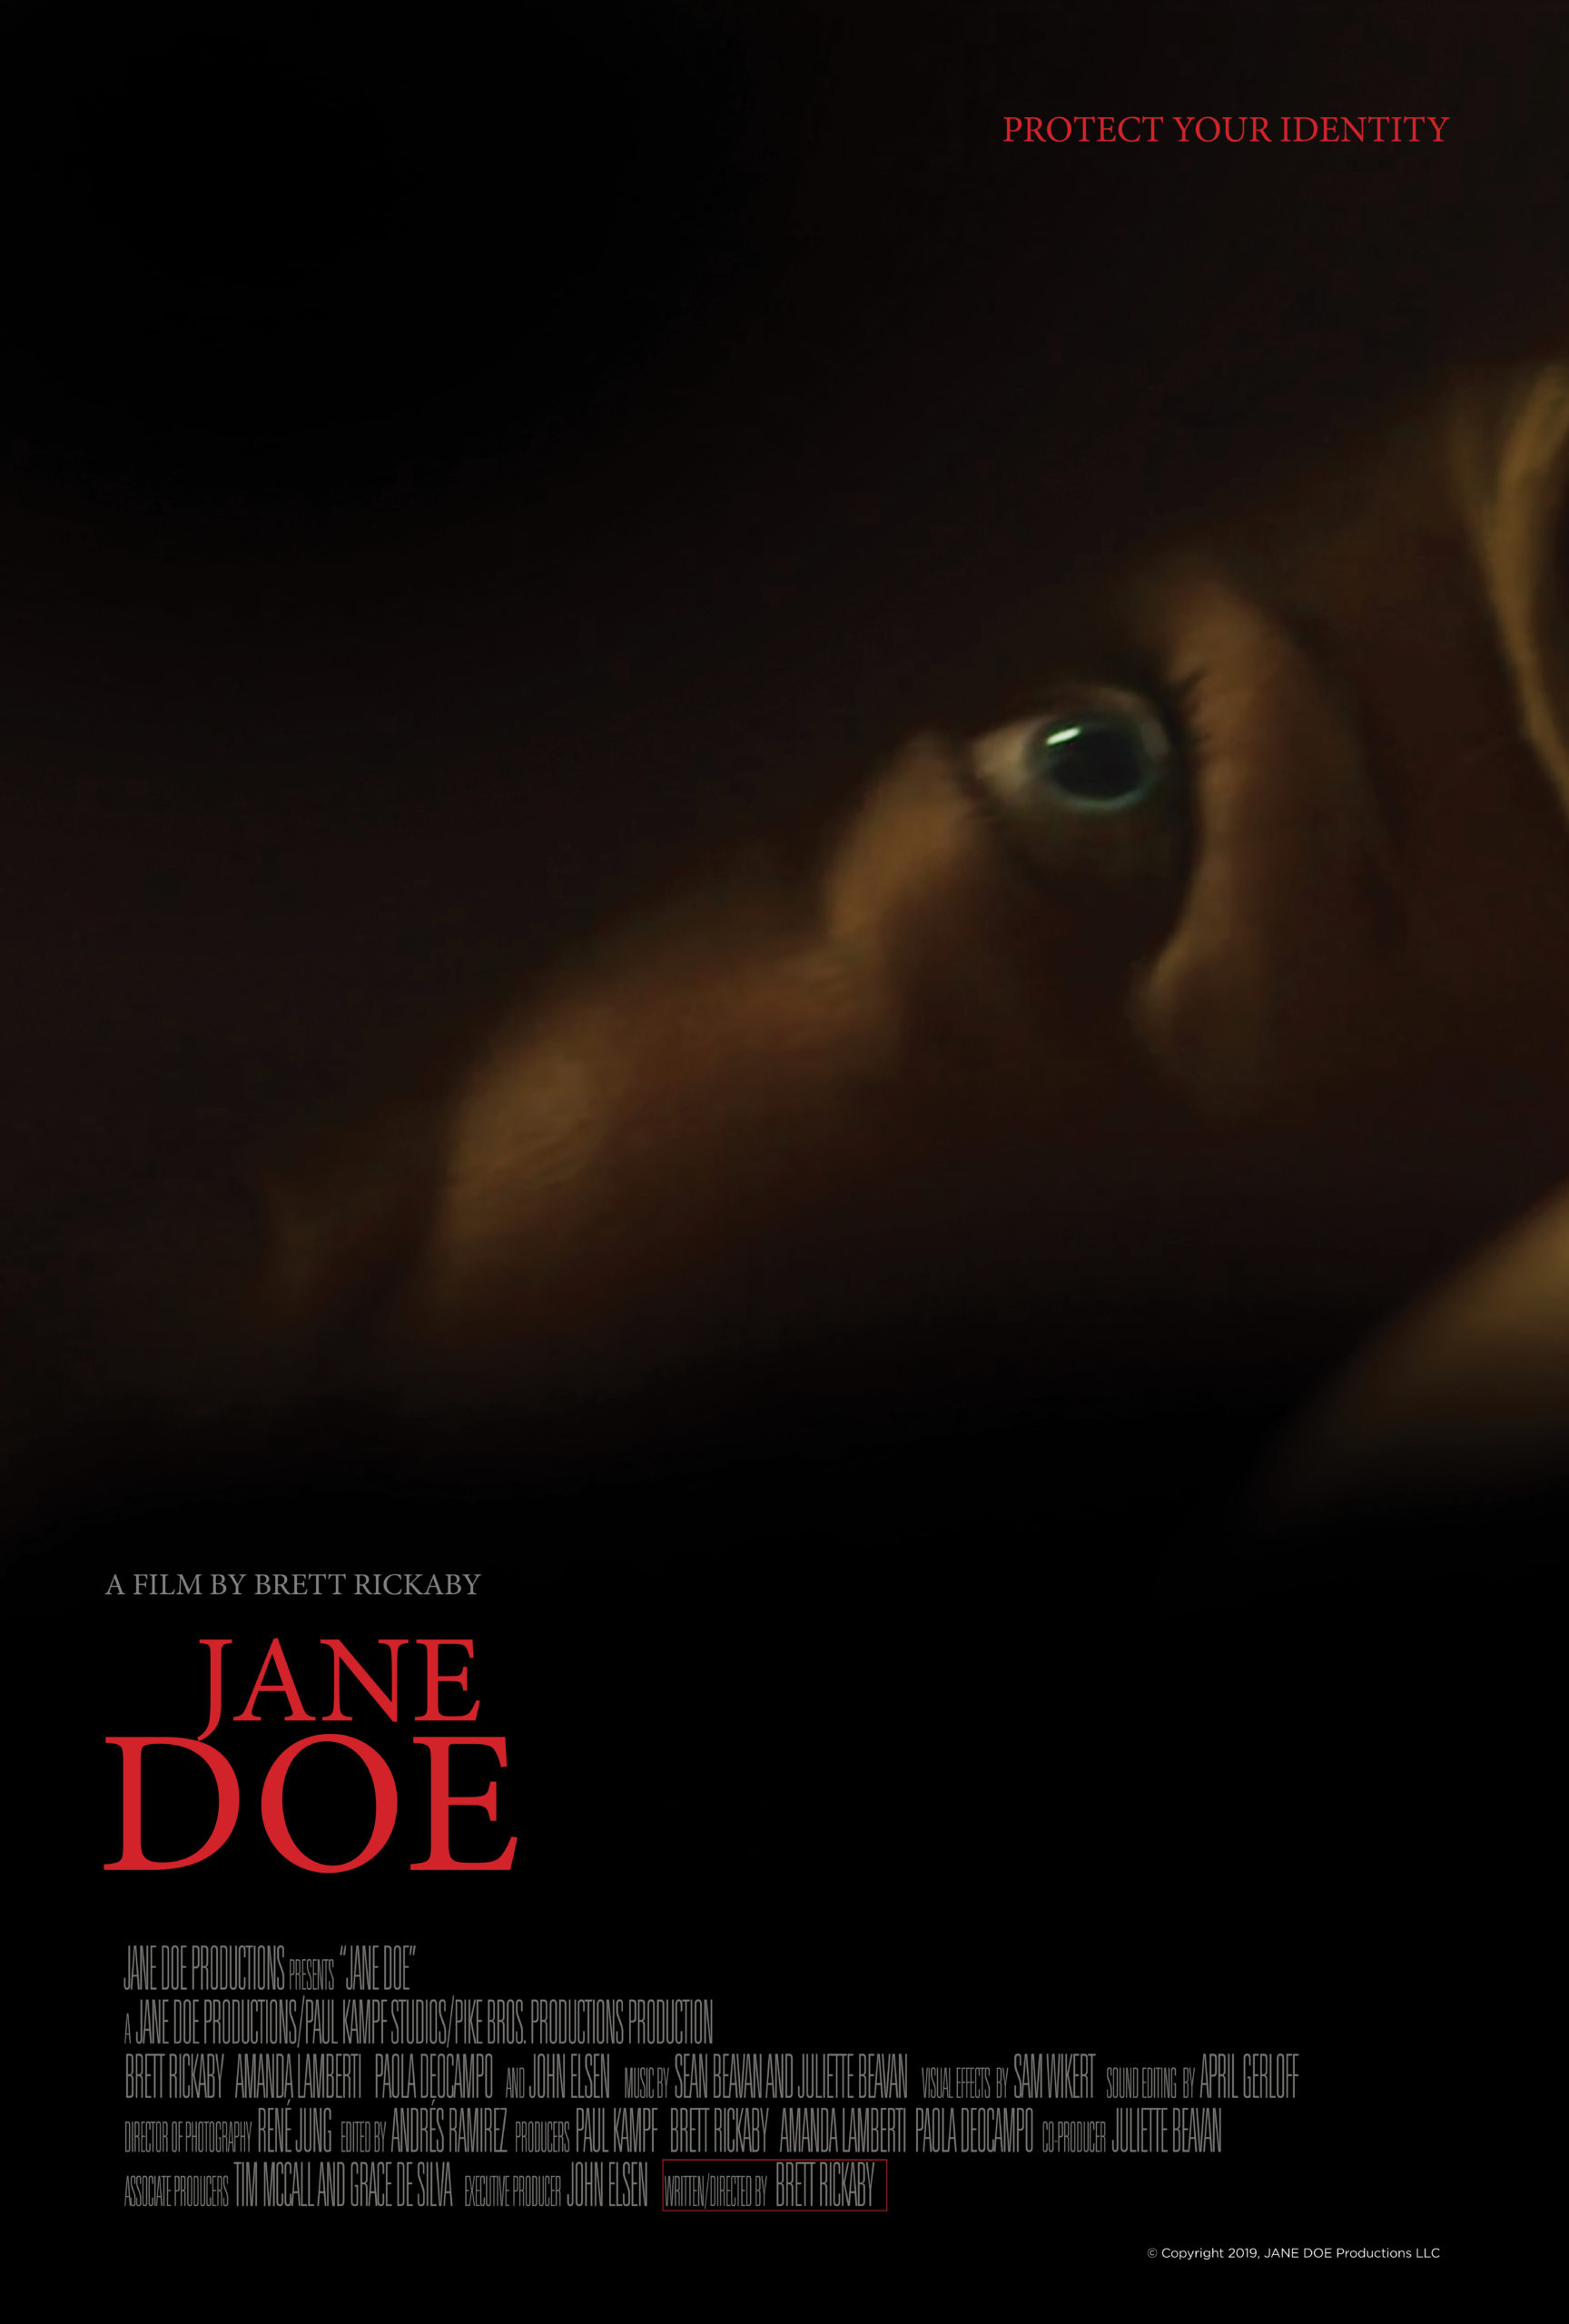 the ballad of jane doe